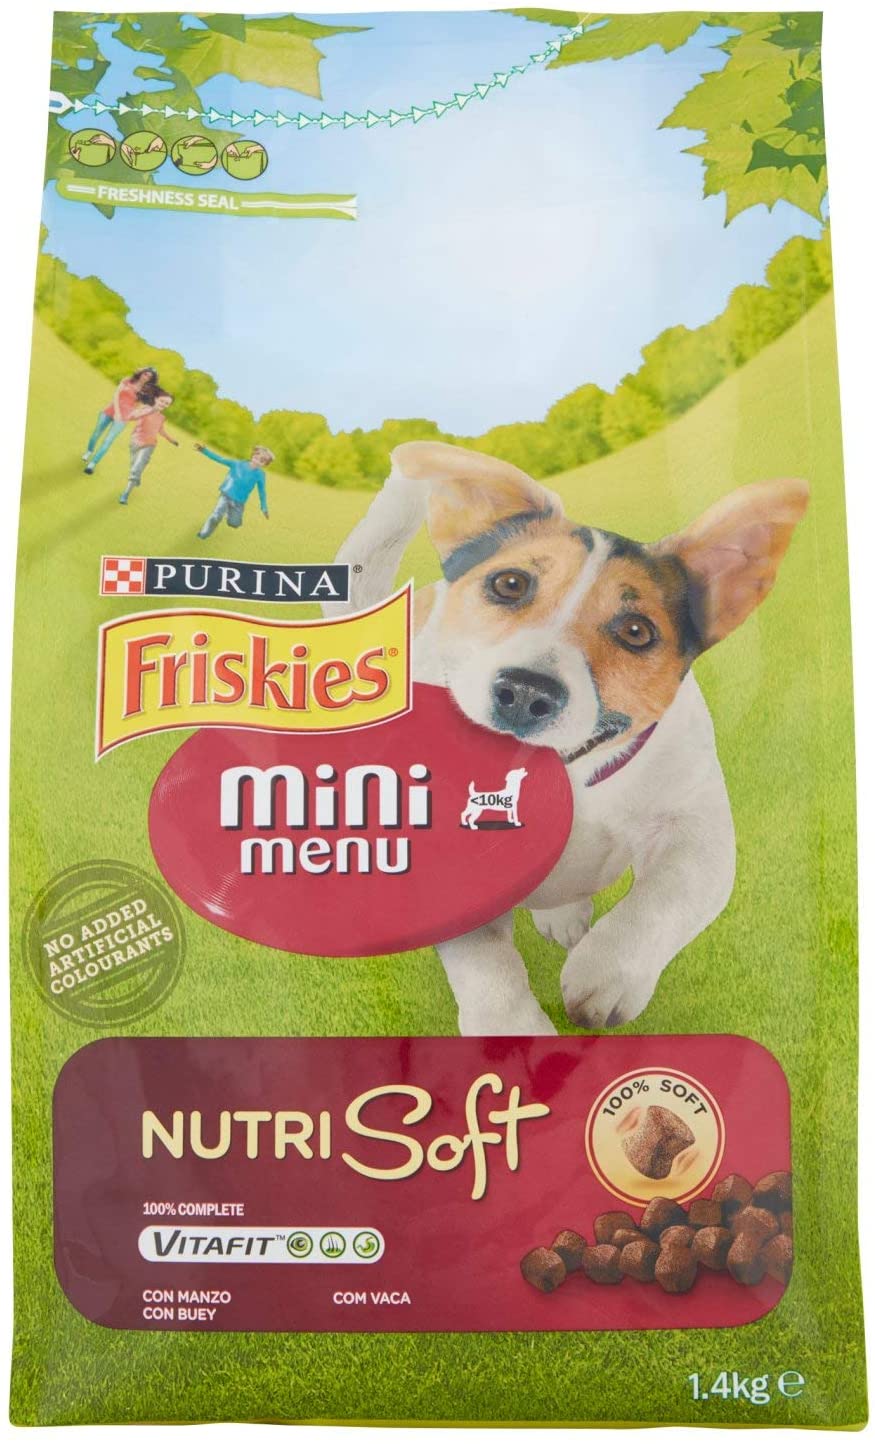  Friskies VitaFit Mini Menu Nutri Soft Perro Adult Raza Pequeña con Buey 1,4 Kg - 1400 gr 